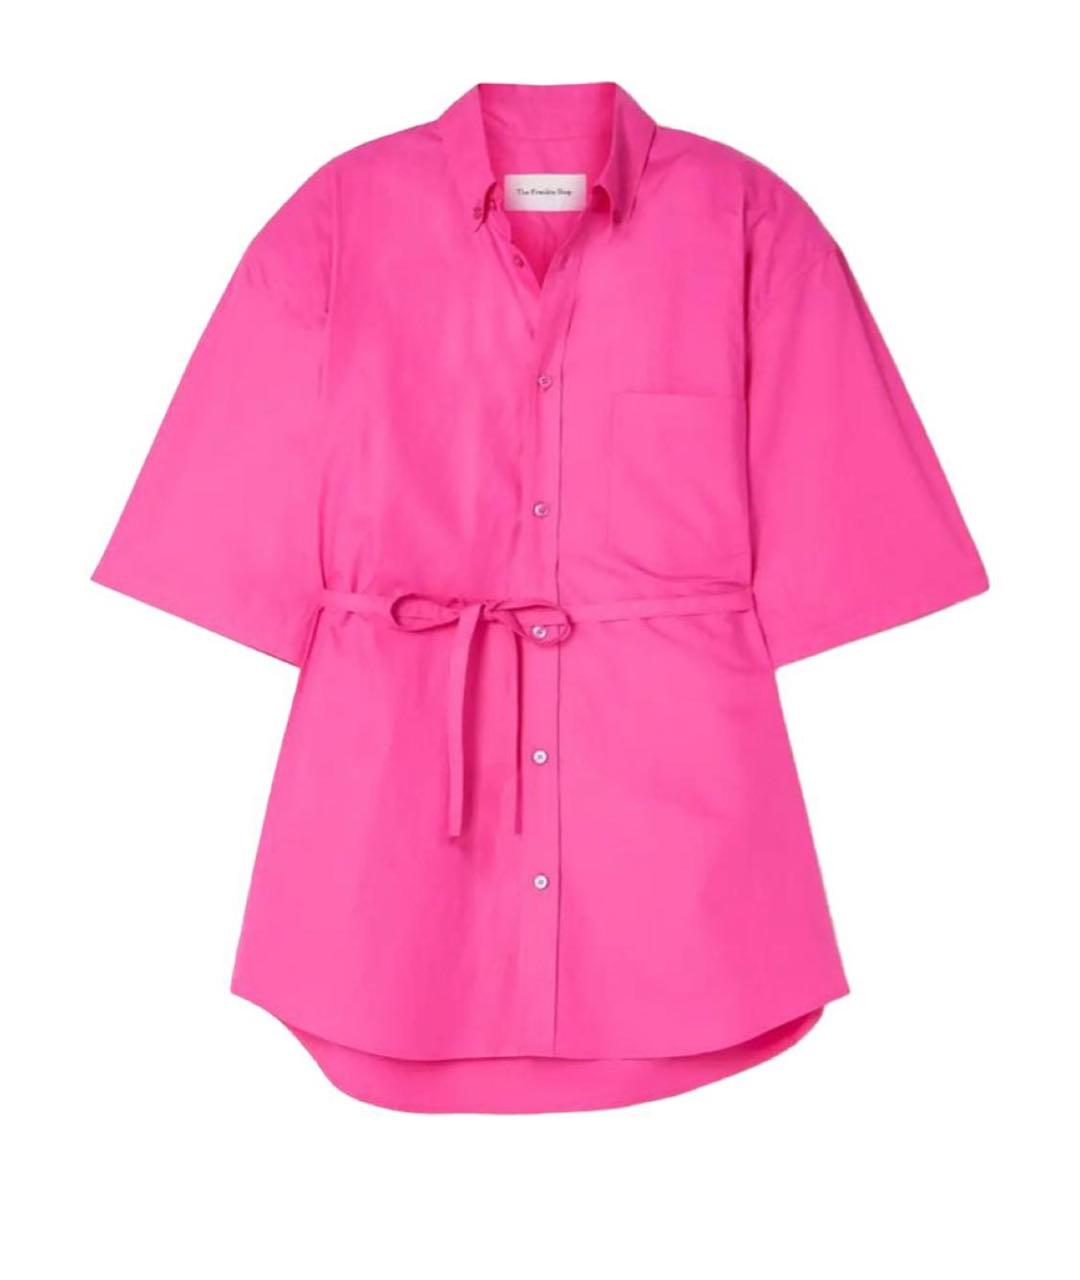 THE FRANKIE SHOP Розовая хлопковая рубашка, фото 1